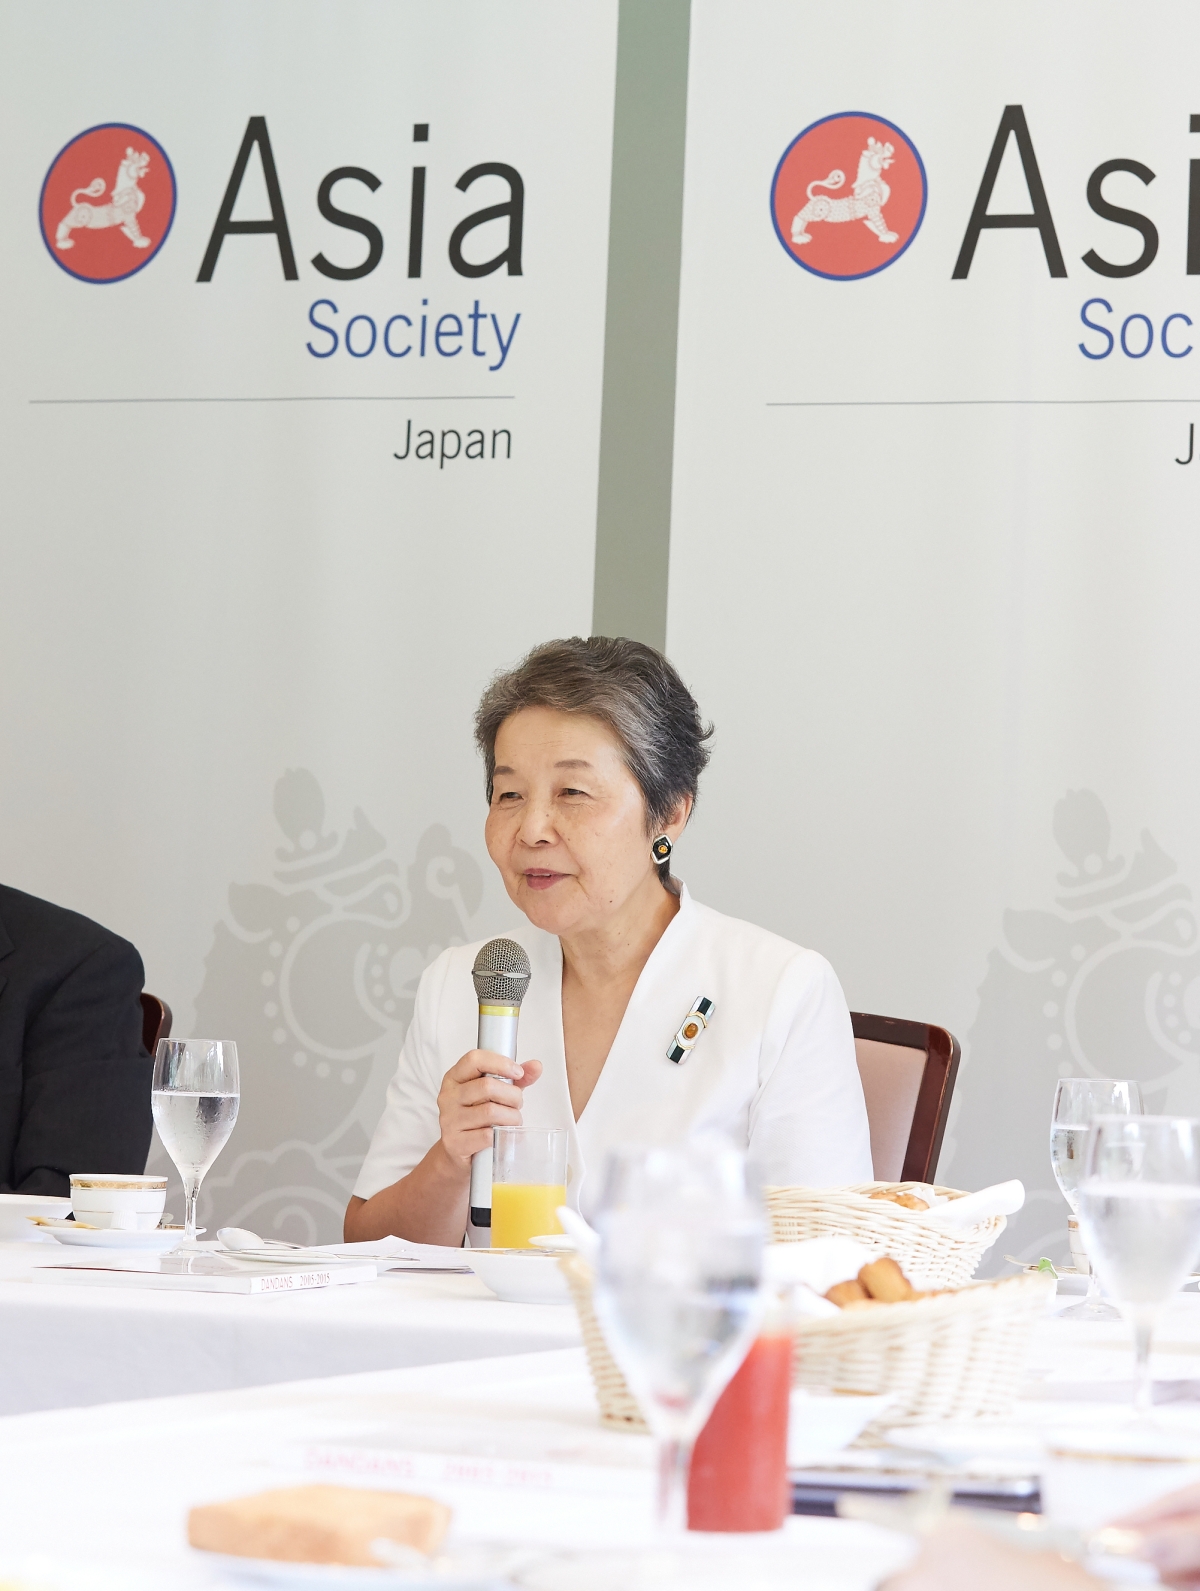 Kazuko Aso Breakfast Meeting Asia Society Japan